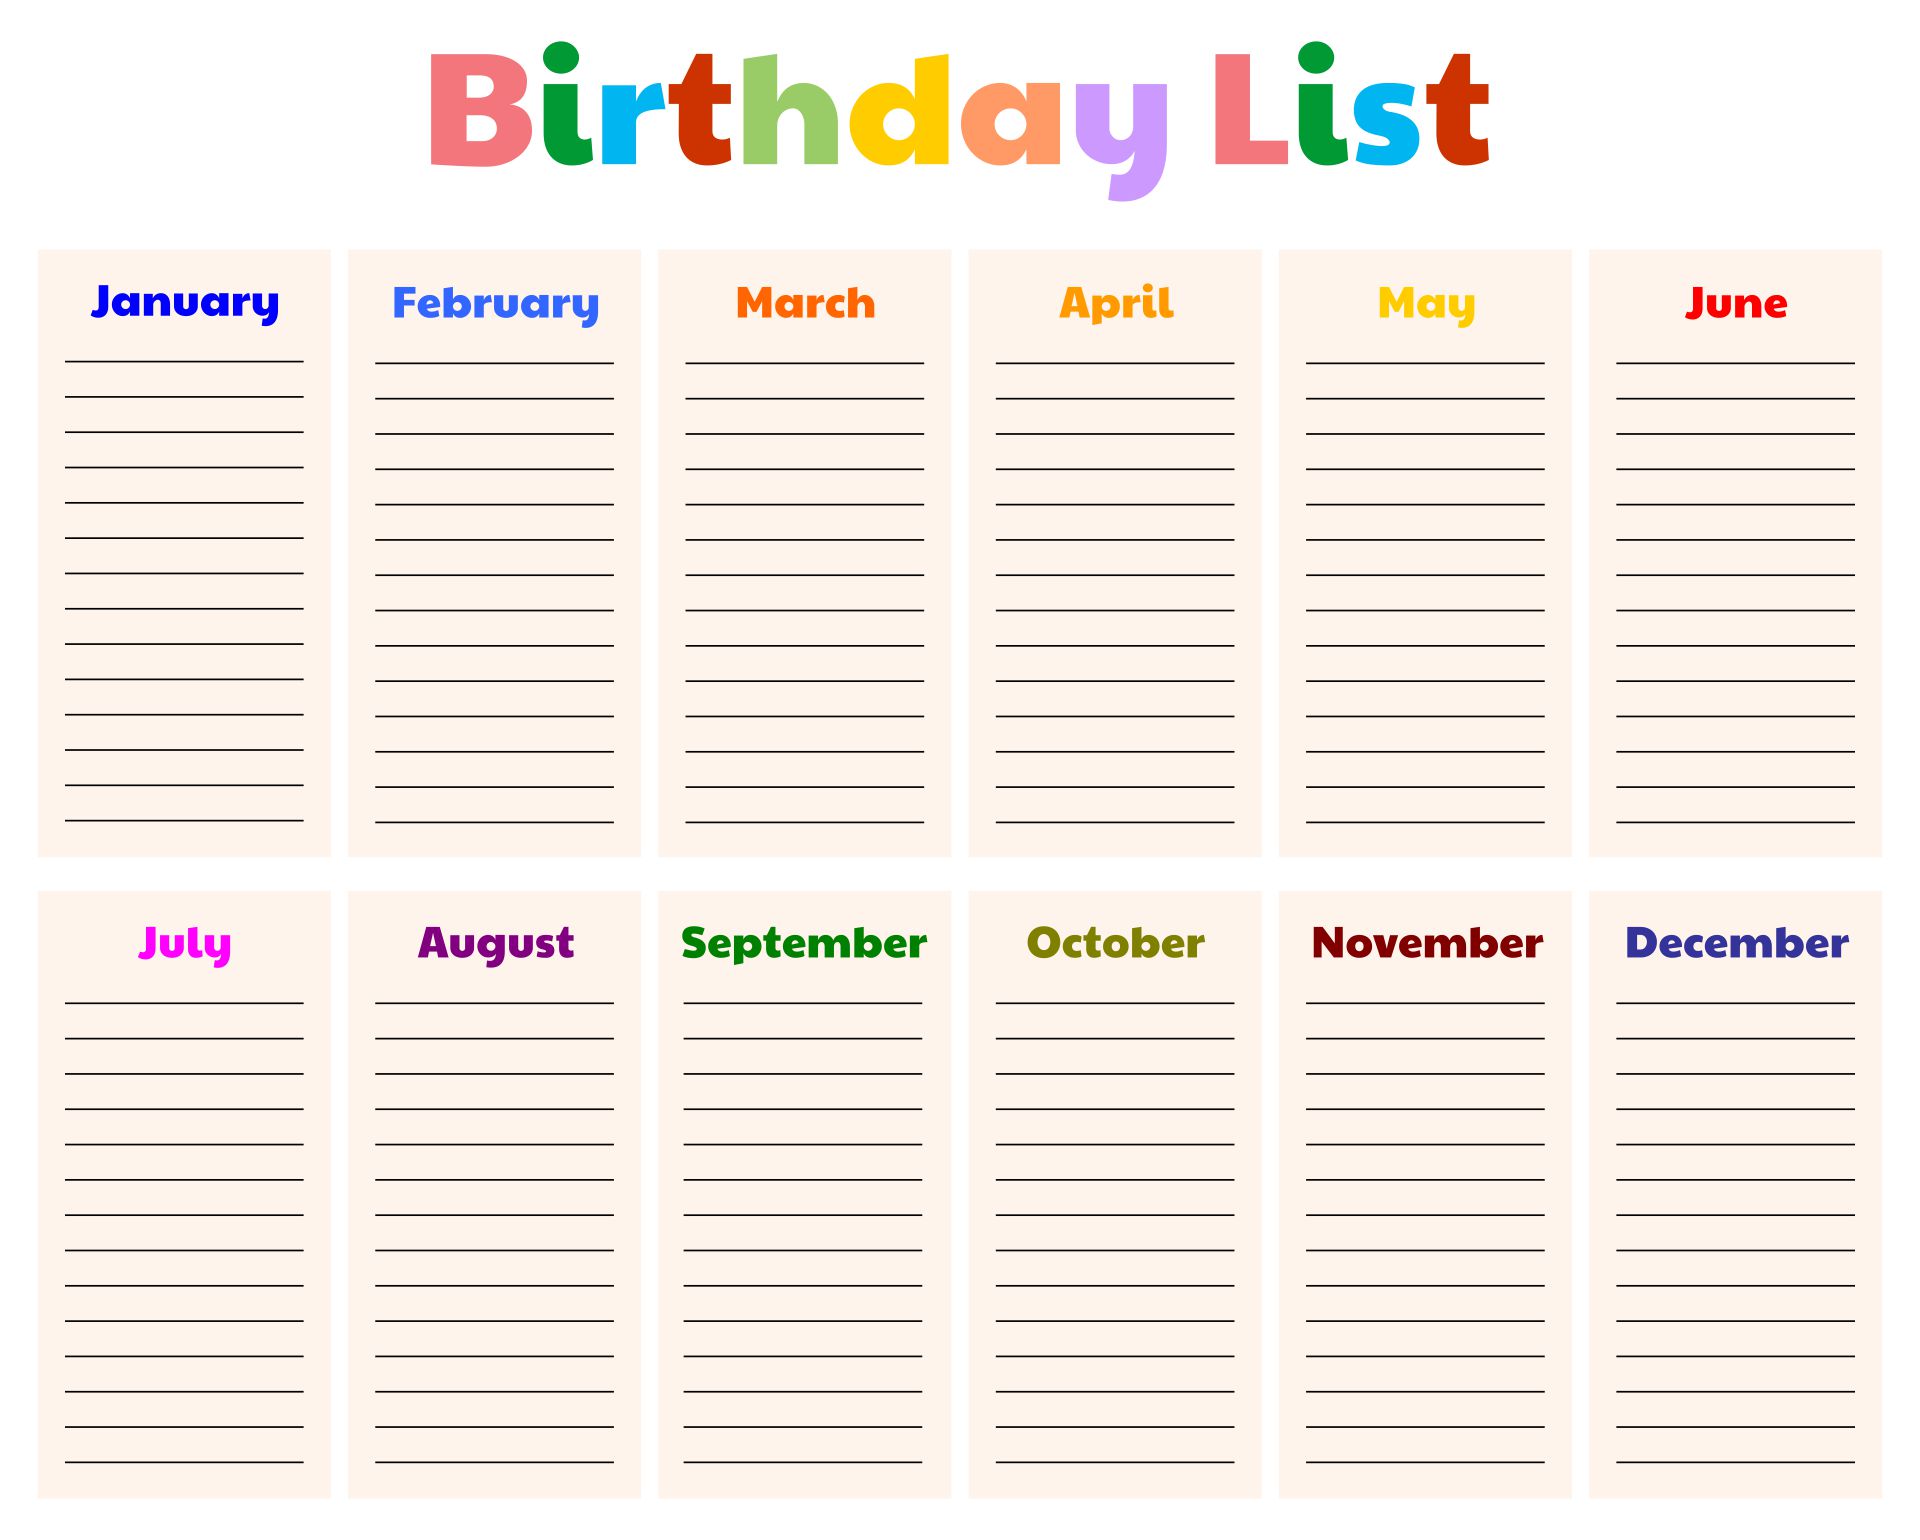 Employee Birthday List Template Word